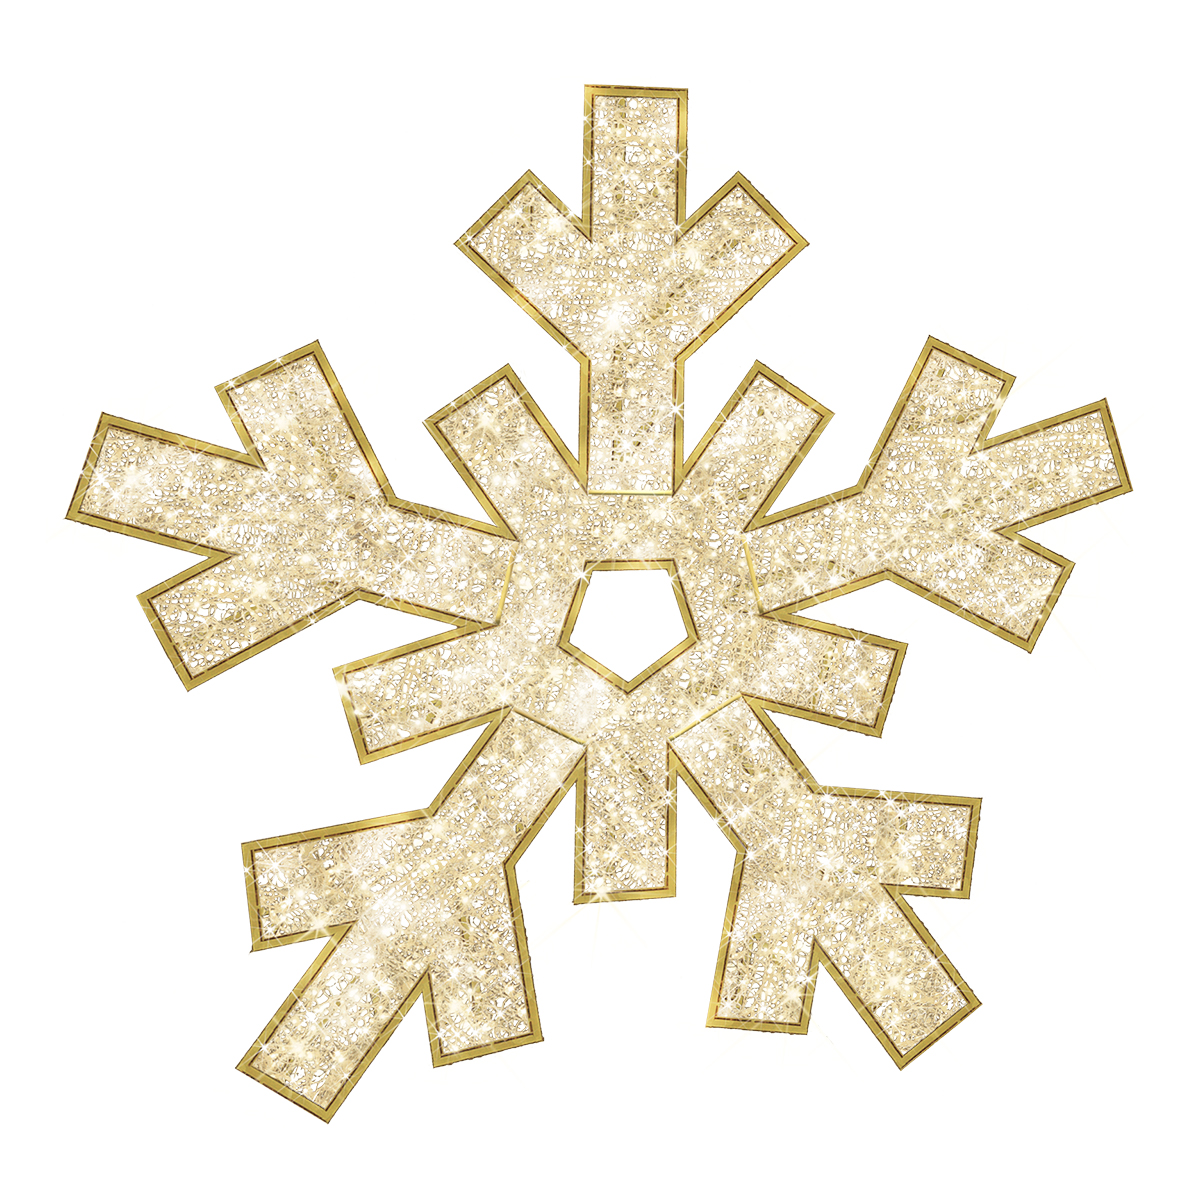 2D Snowflake - Christmas Display - Cool White LED Lights - Gold - Medium - 6.5ft tall